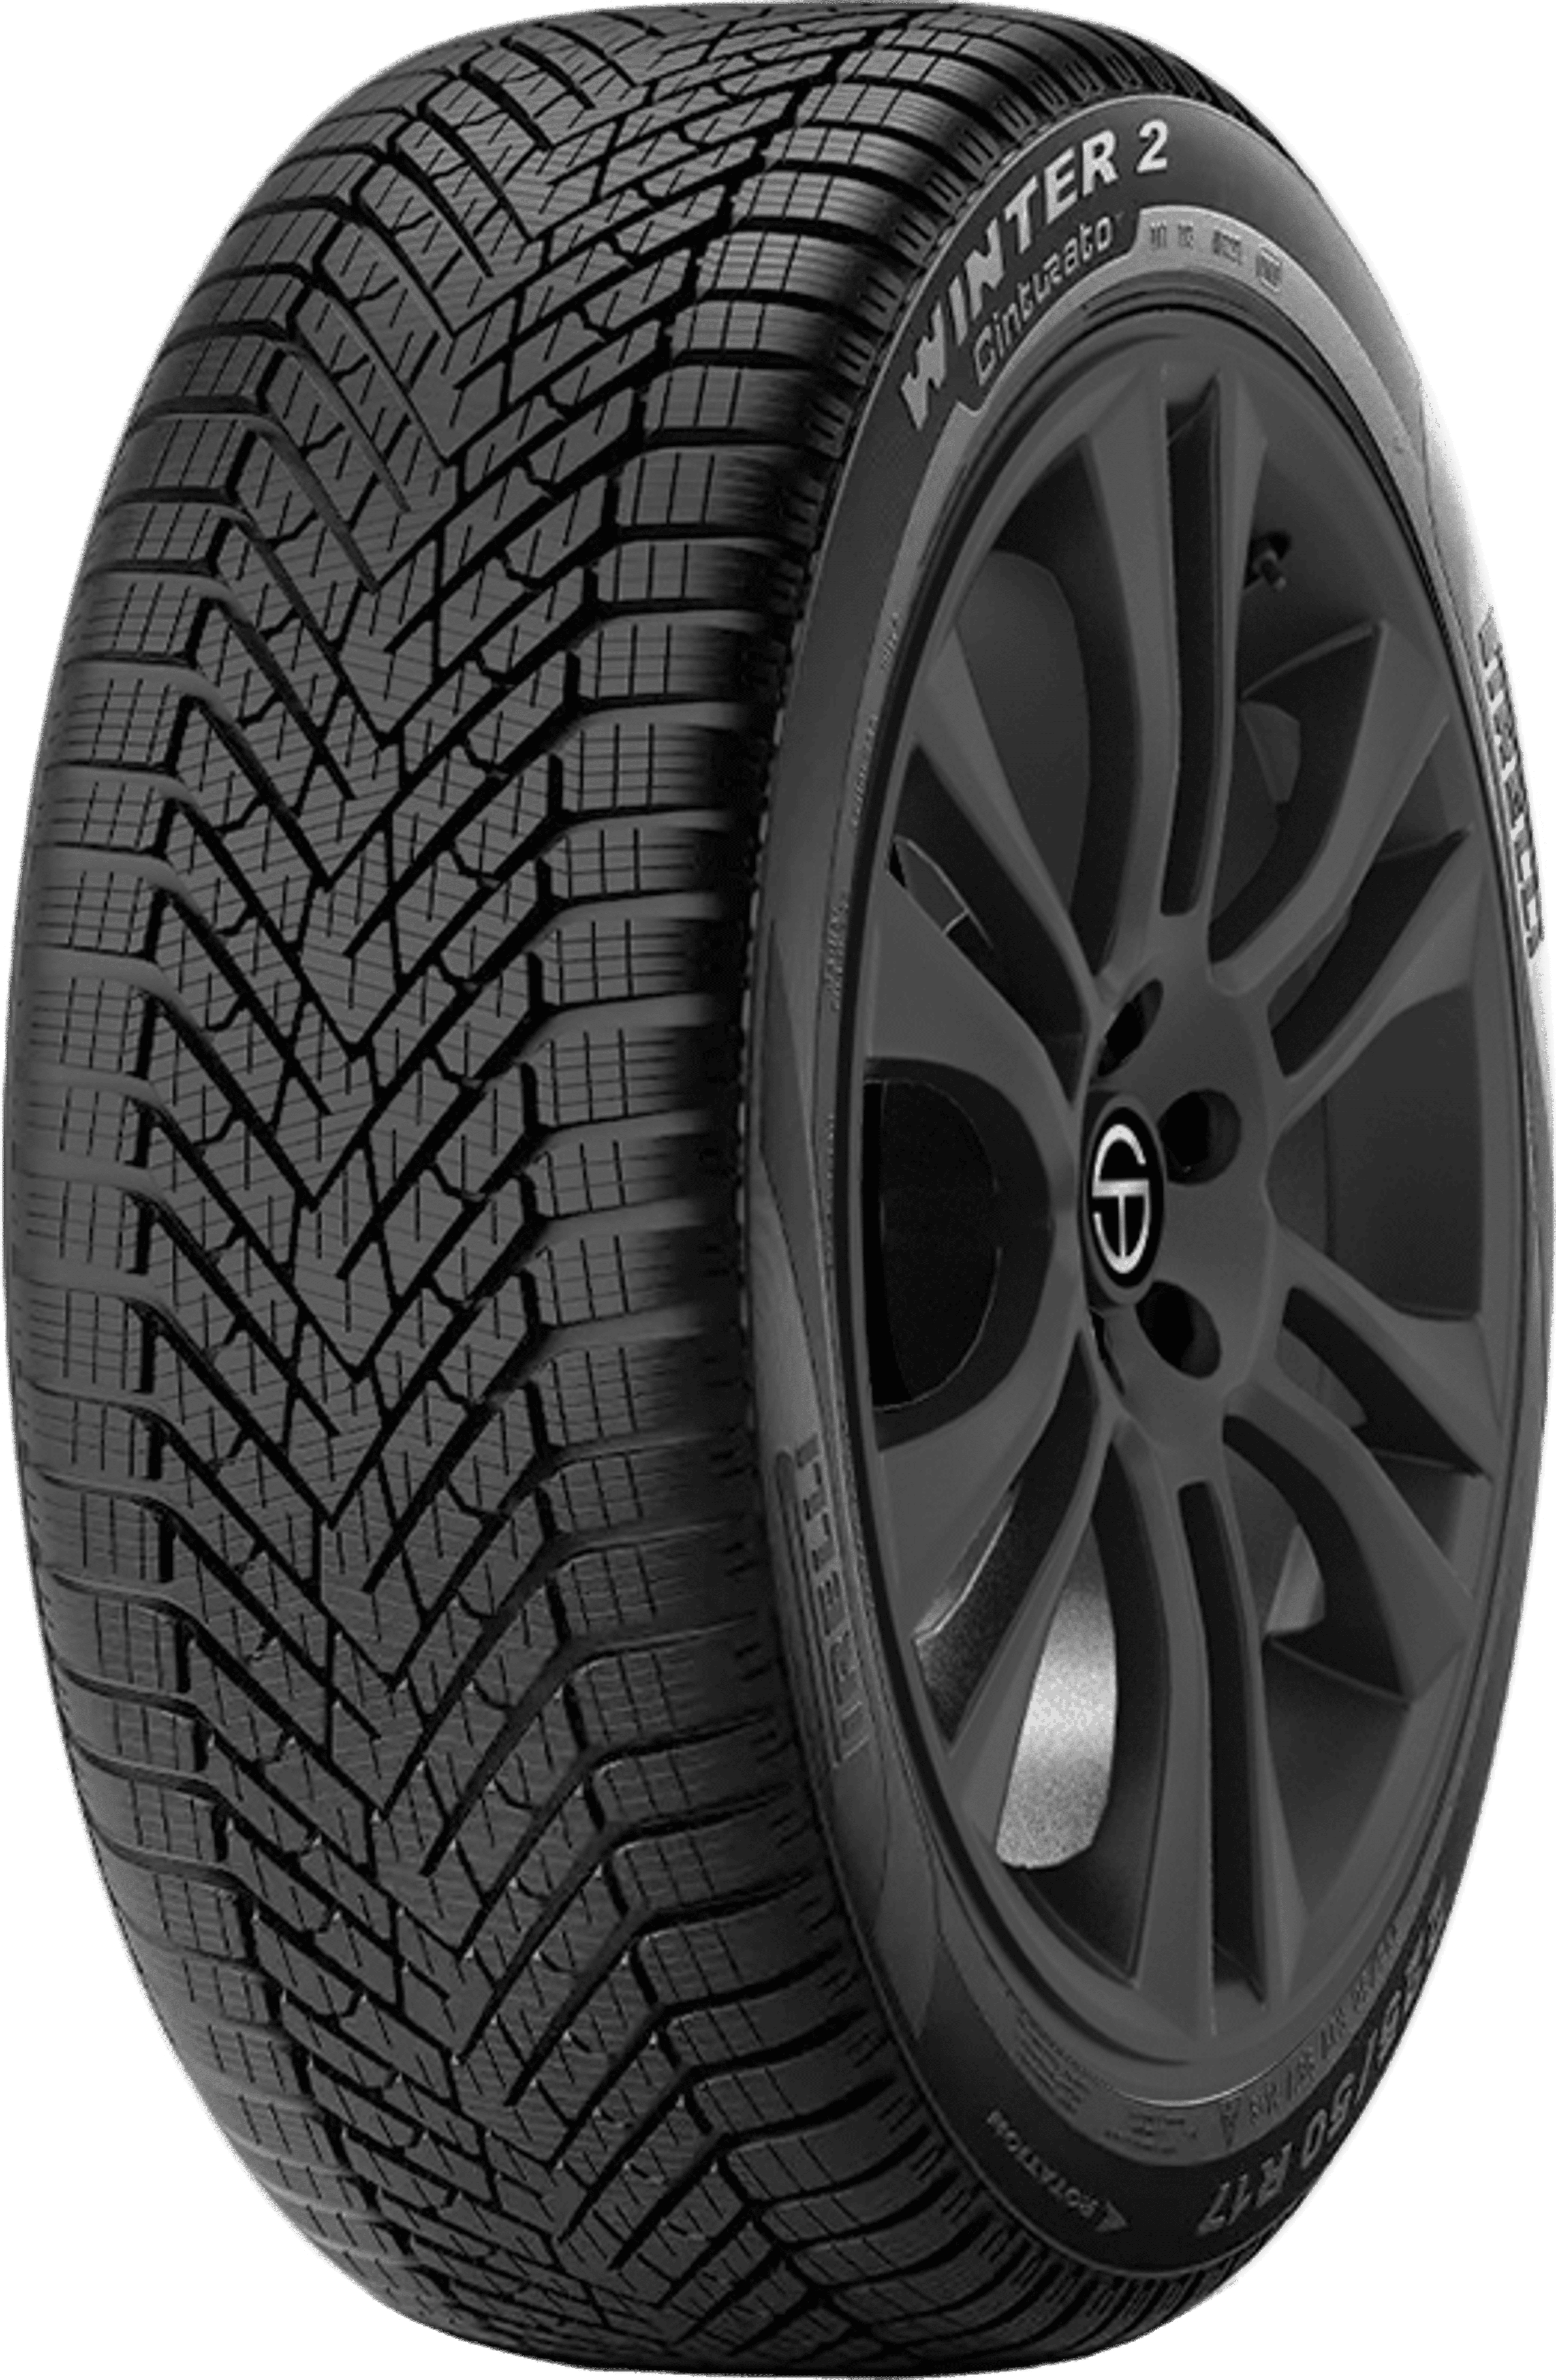 Buy Pirelli Cinturato Winter 2 Tires Online | SimpleTire | Autoreifen